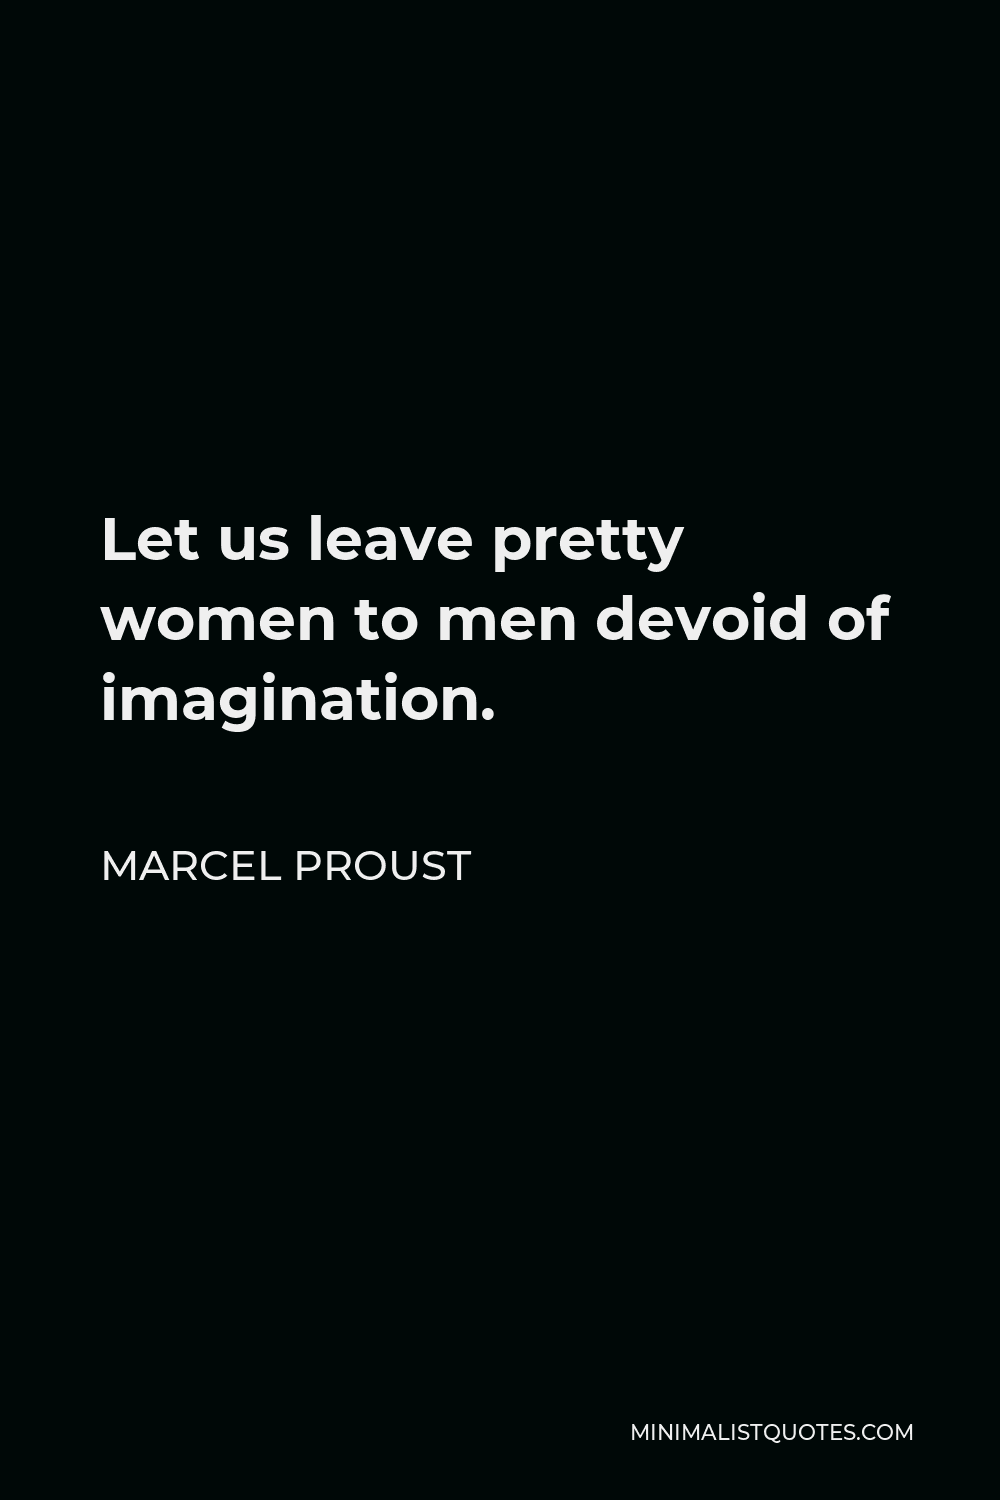 Marcel Proust Quote - Let us leave pretty women to men devoid of imagination.